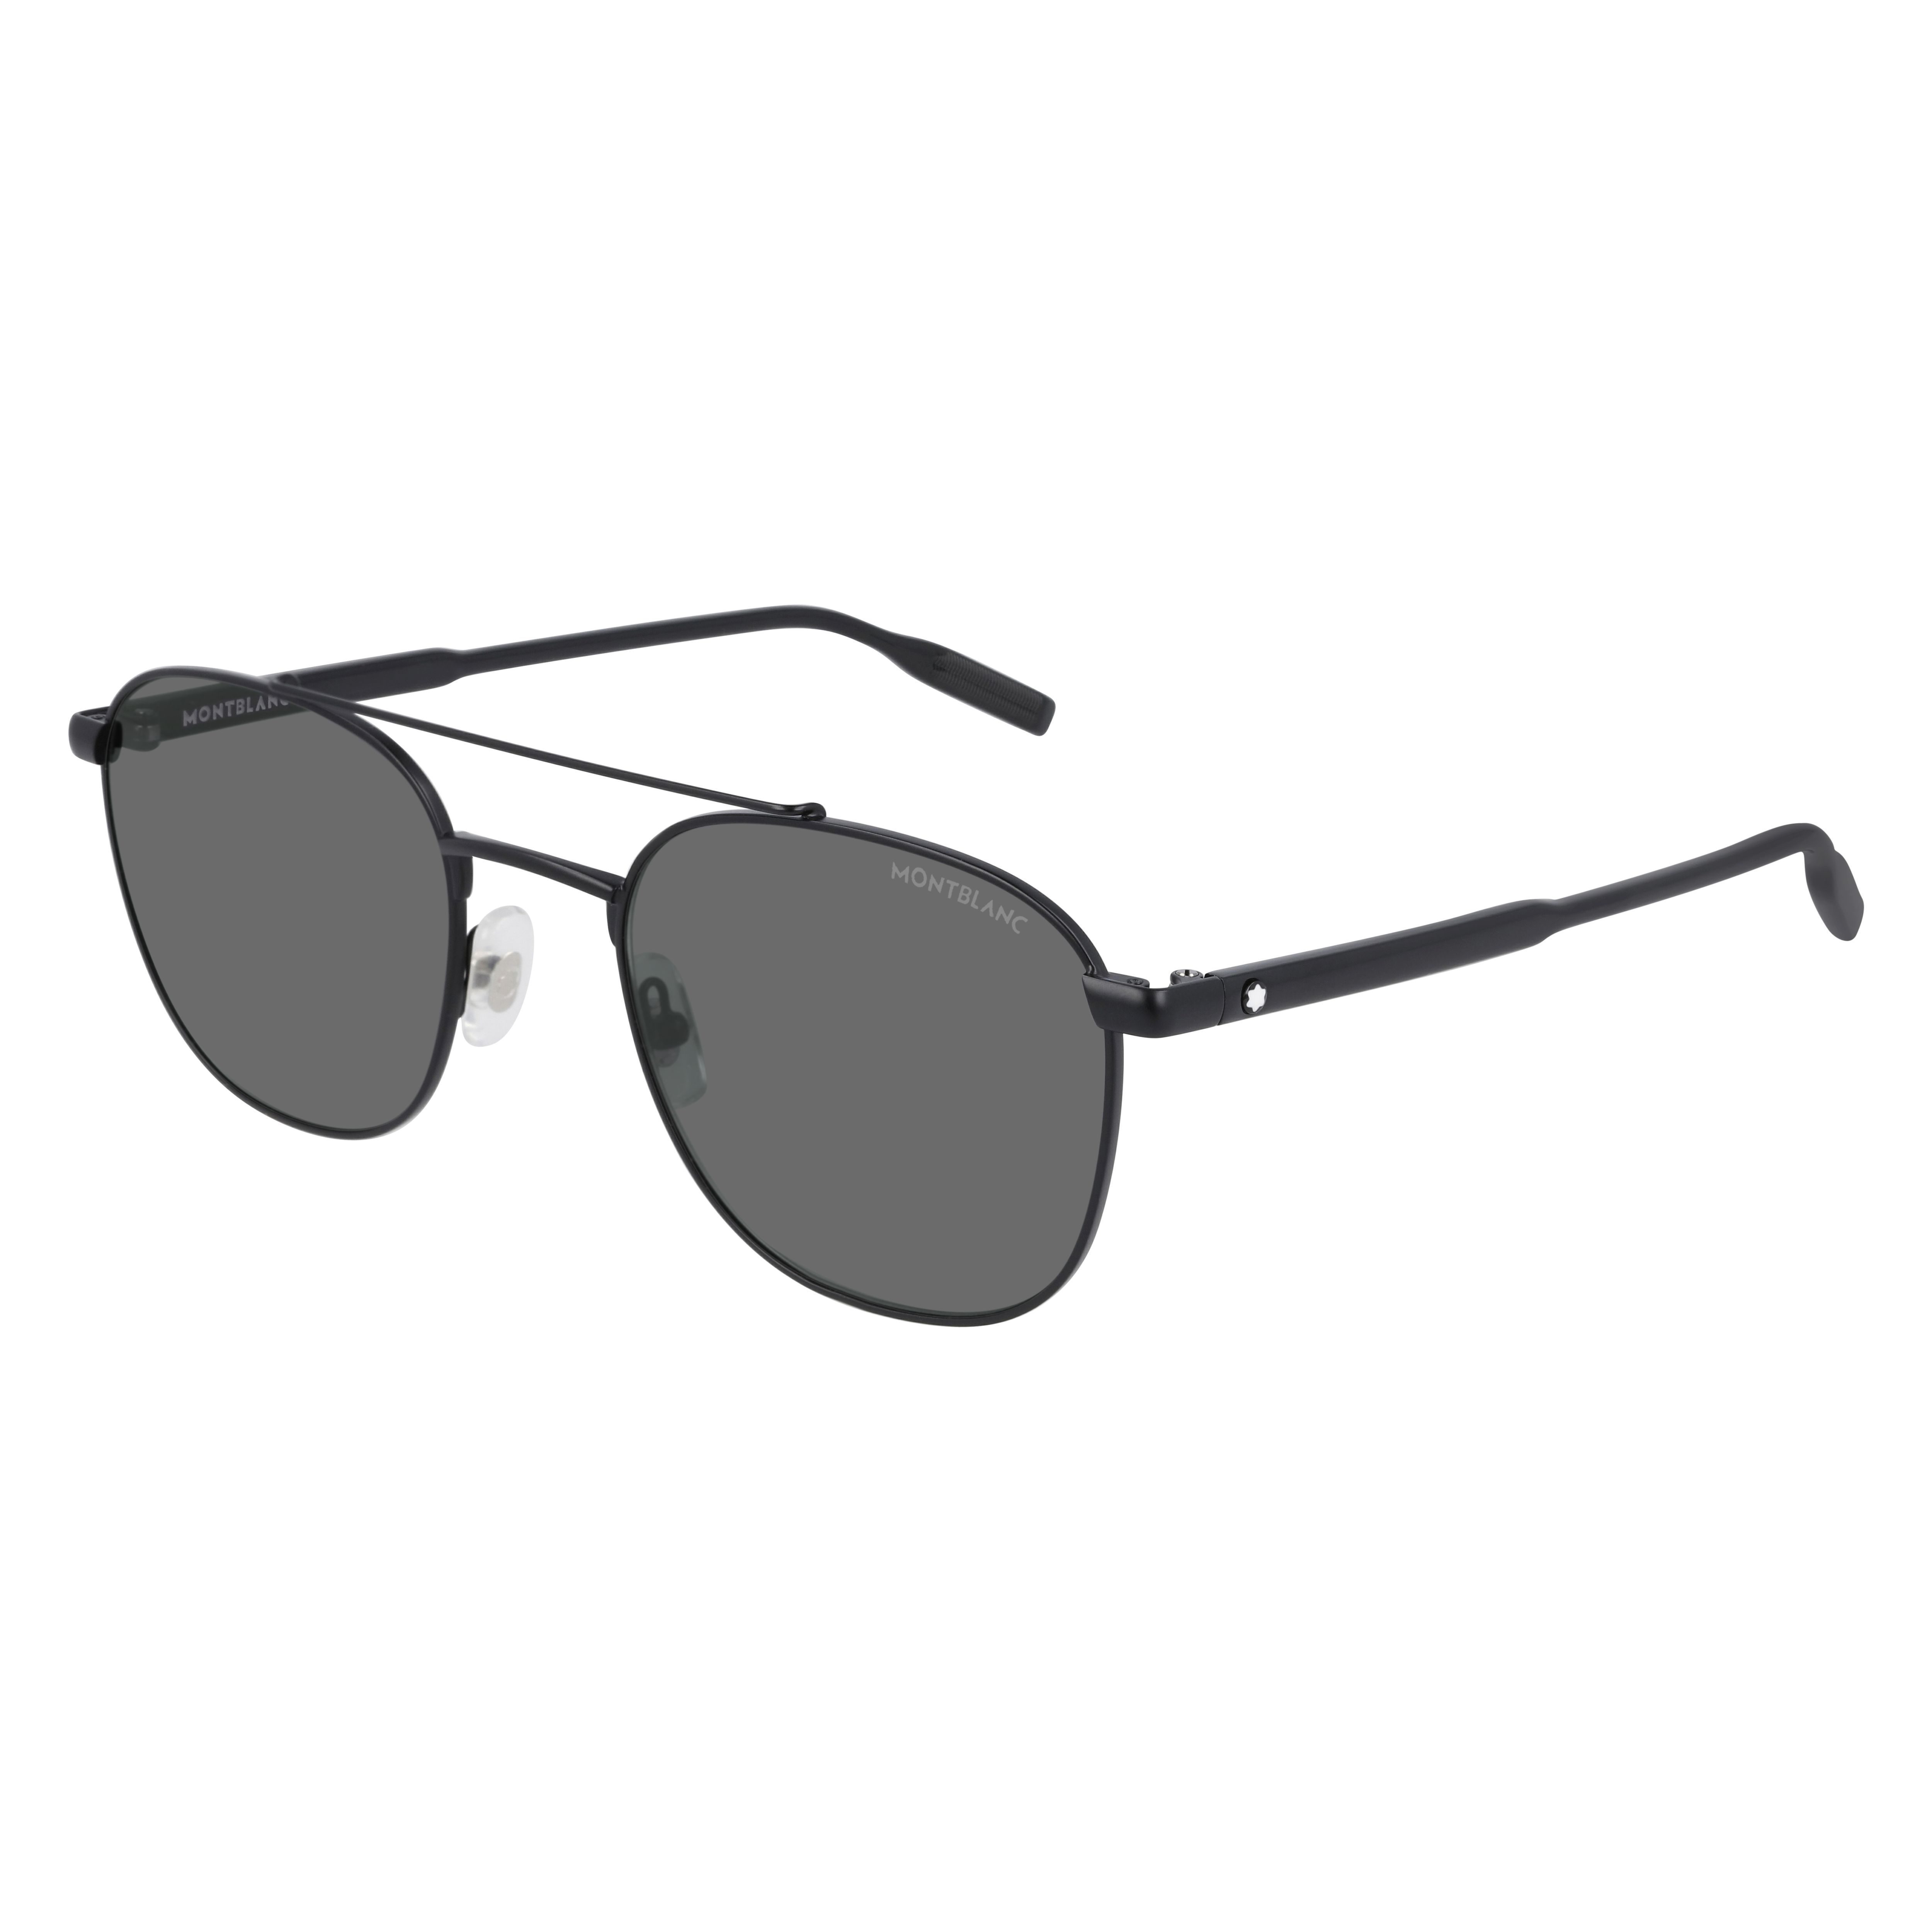 MB0114S Panthos Sunglasses 001 - size 54